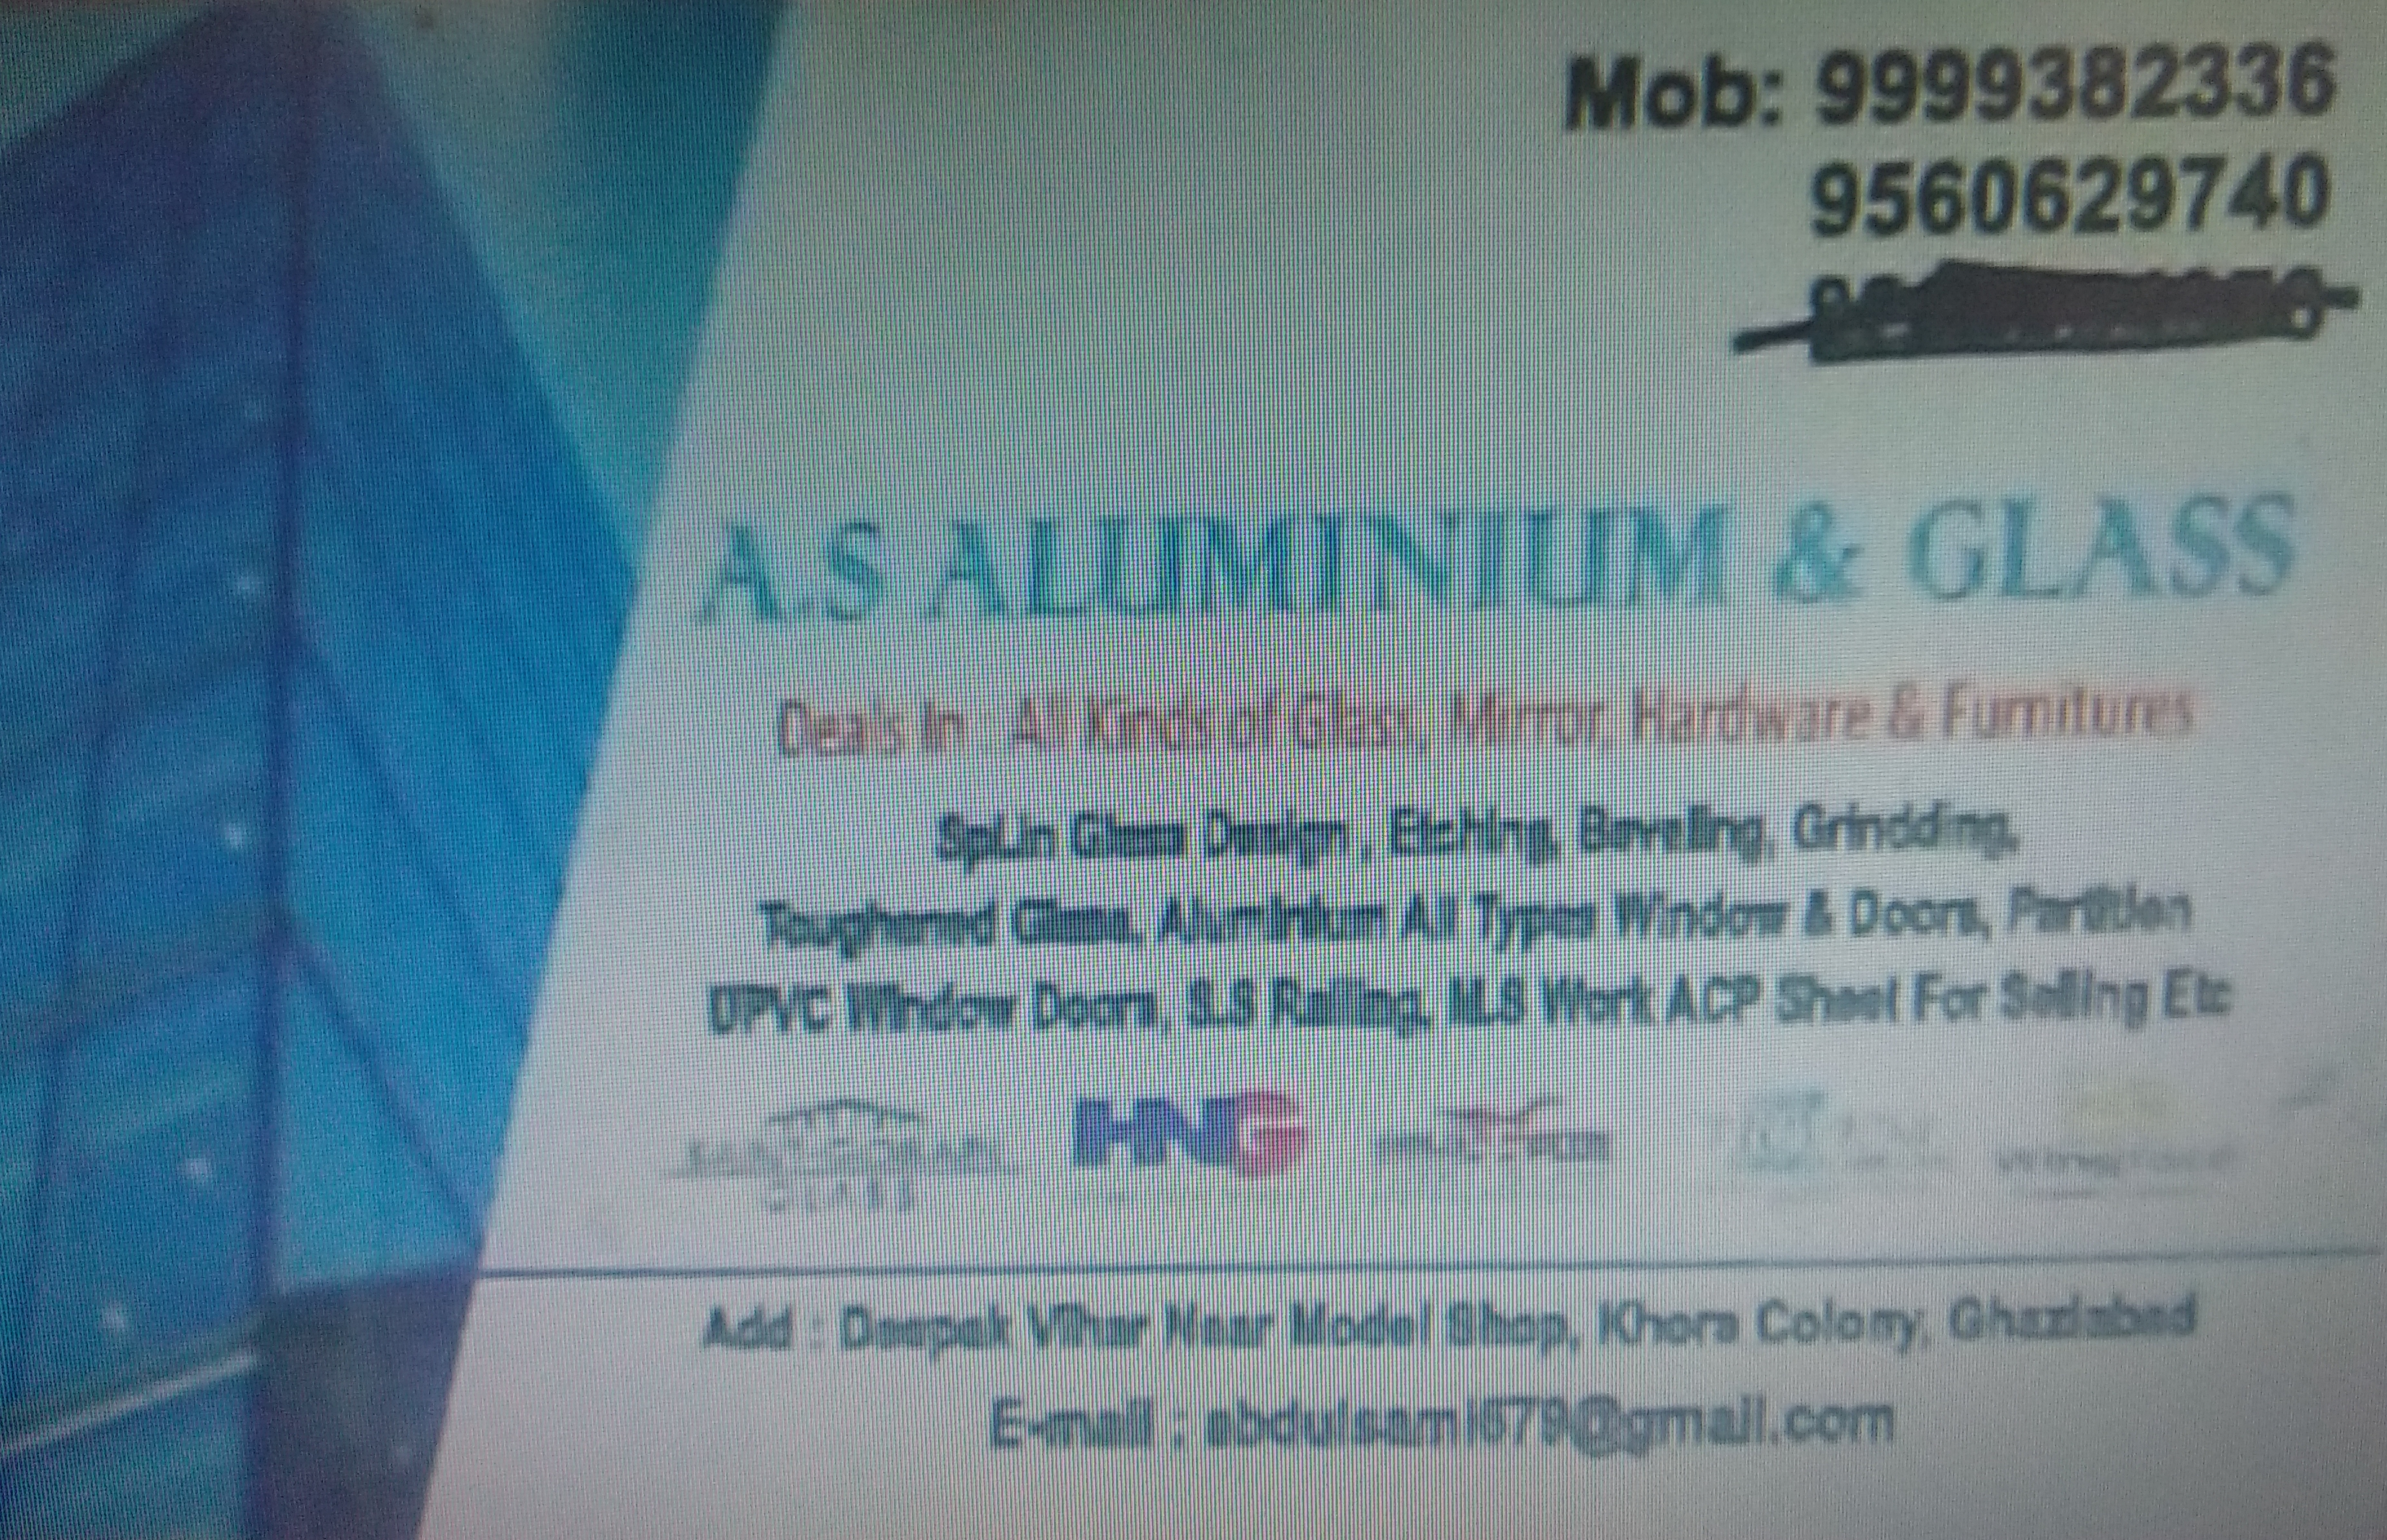 A.S Aluminium & Glass Work